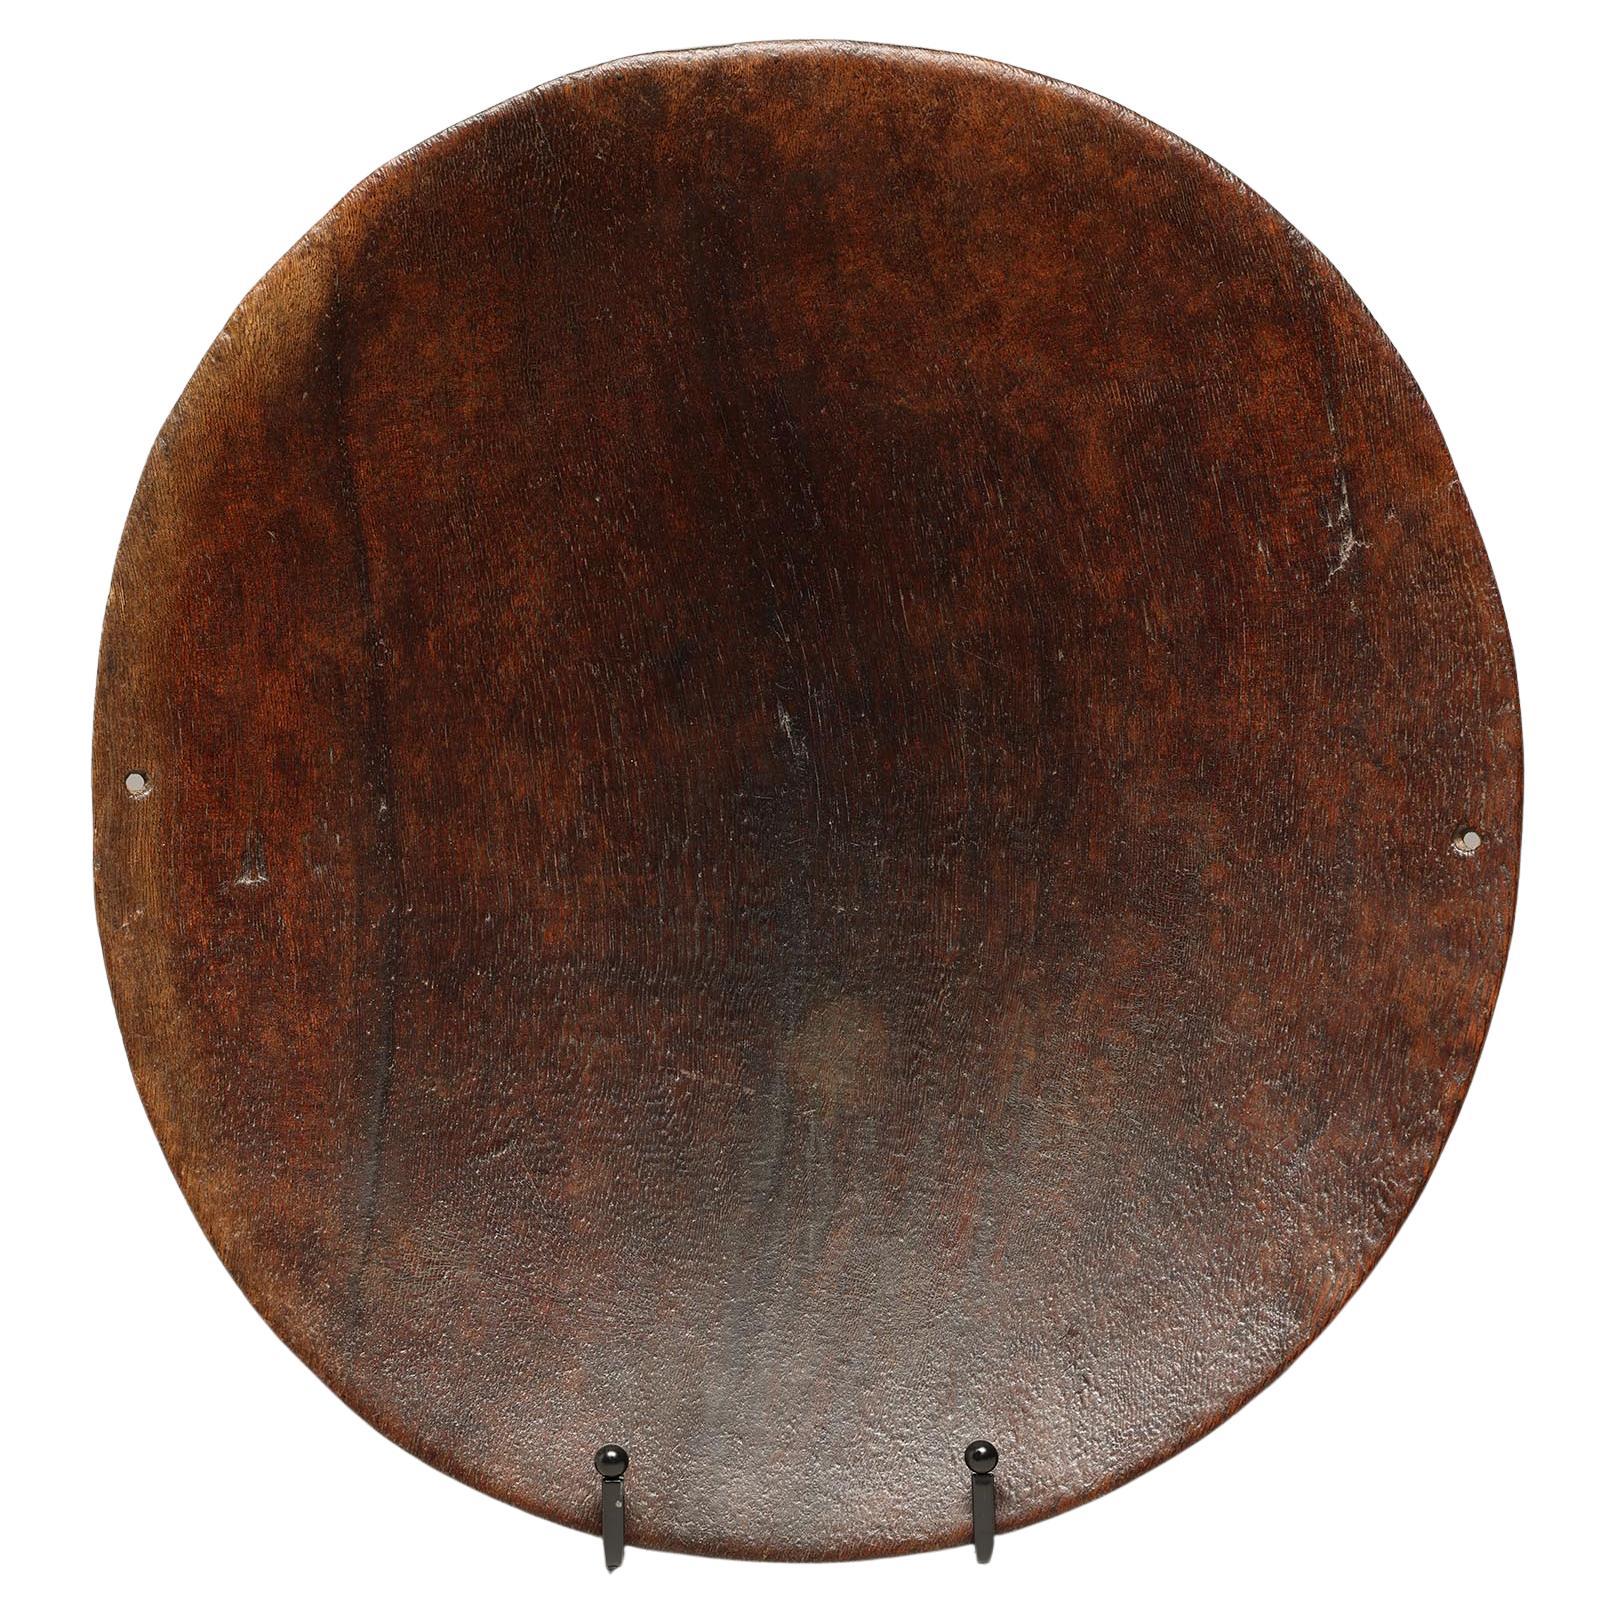 Ancient Fiji Islands Flat Serving Bowl or Platter 19th century Polynesia